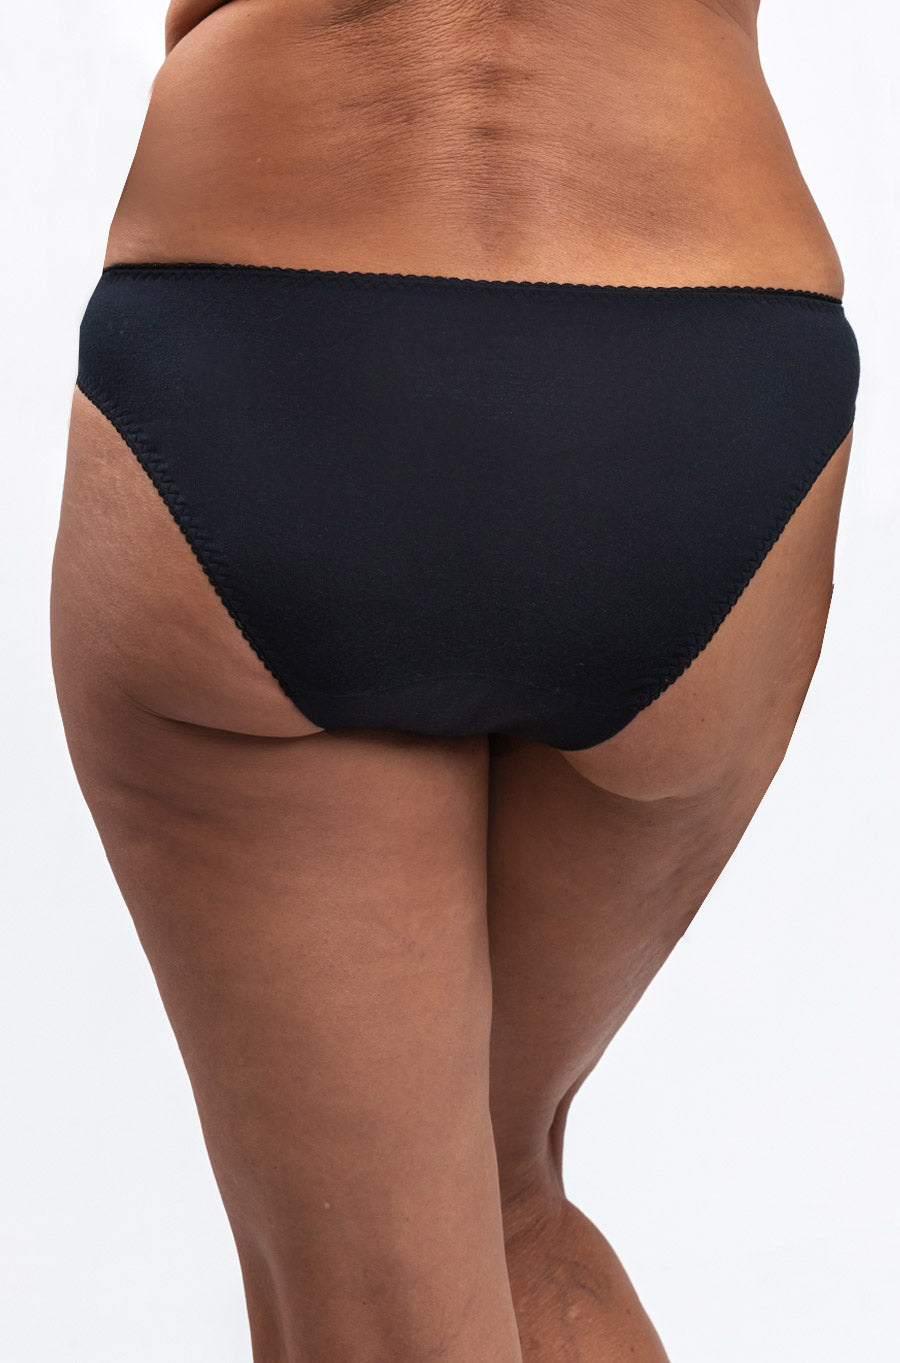  UltiUndies Bikini Modal Incontinence Underwear for